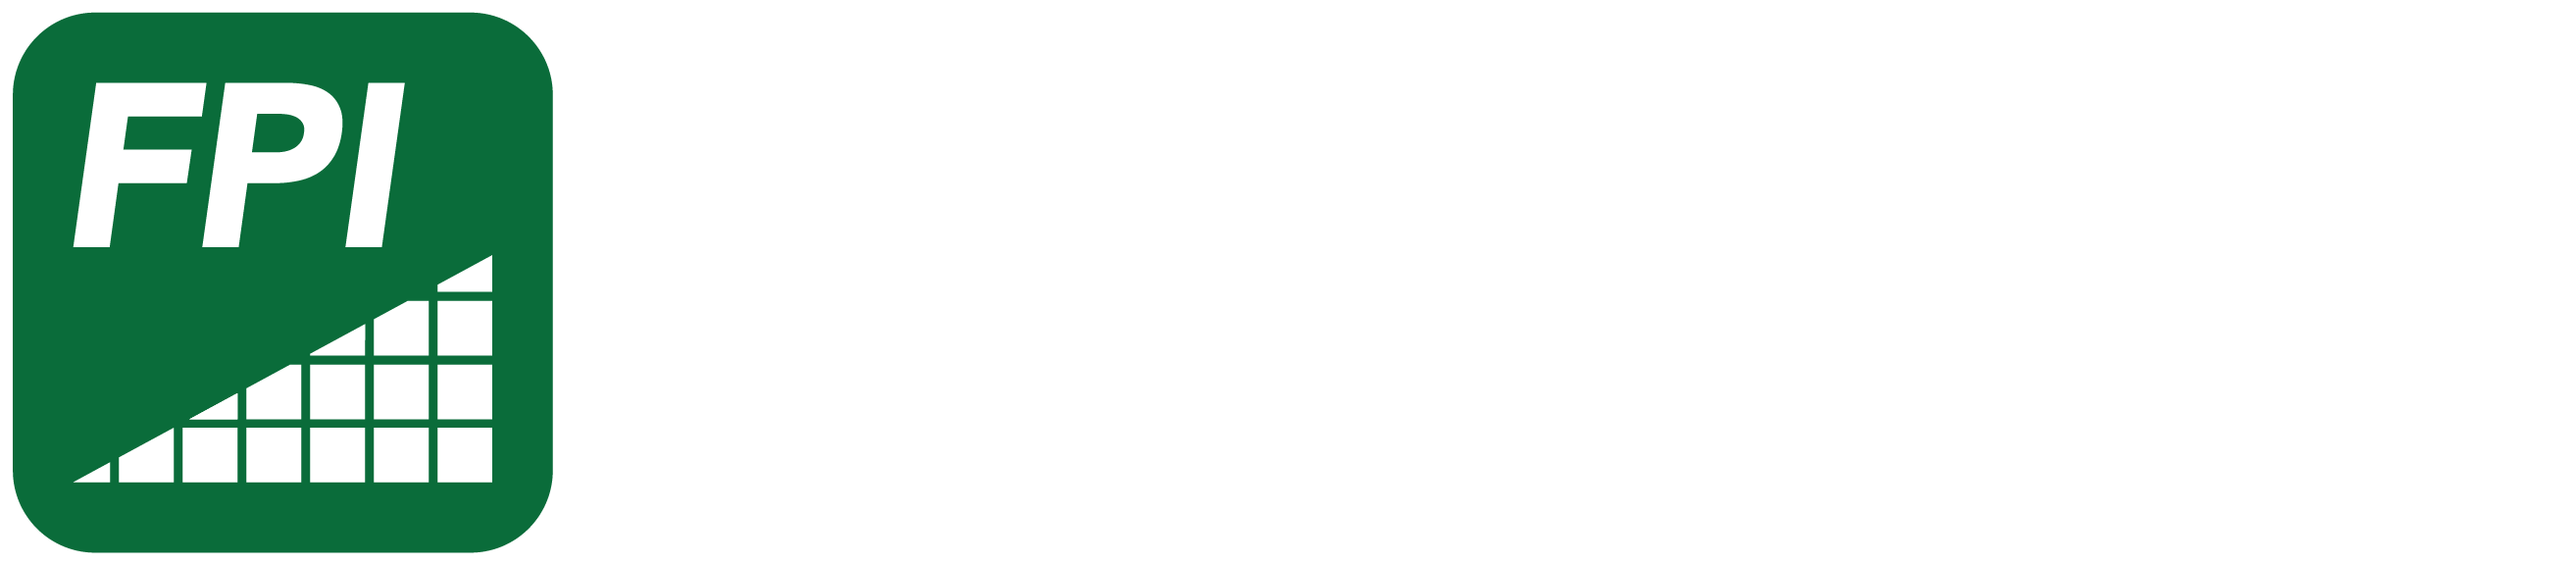 Flexible Plan Investments (logo) 